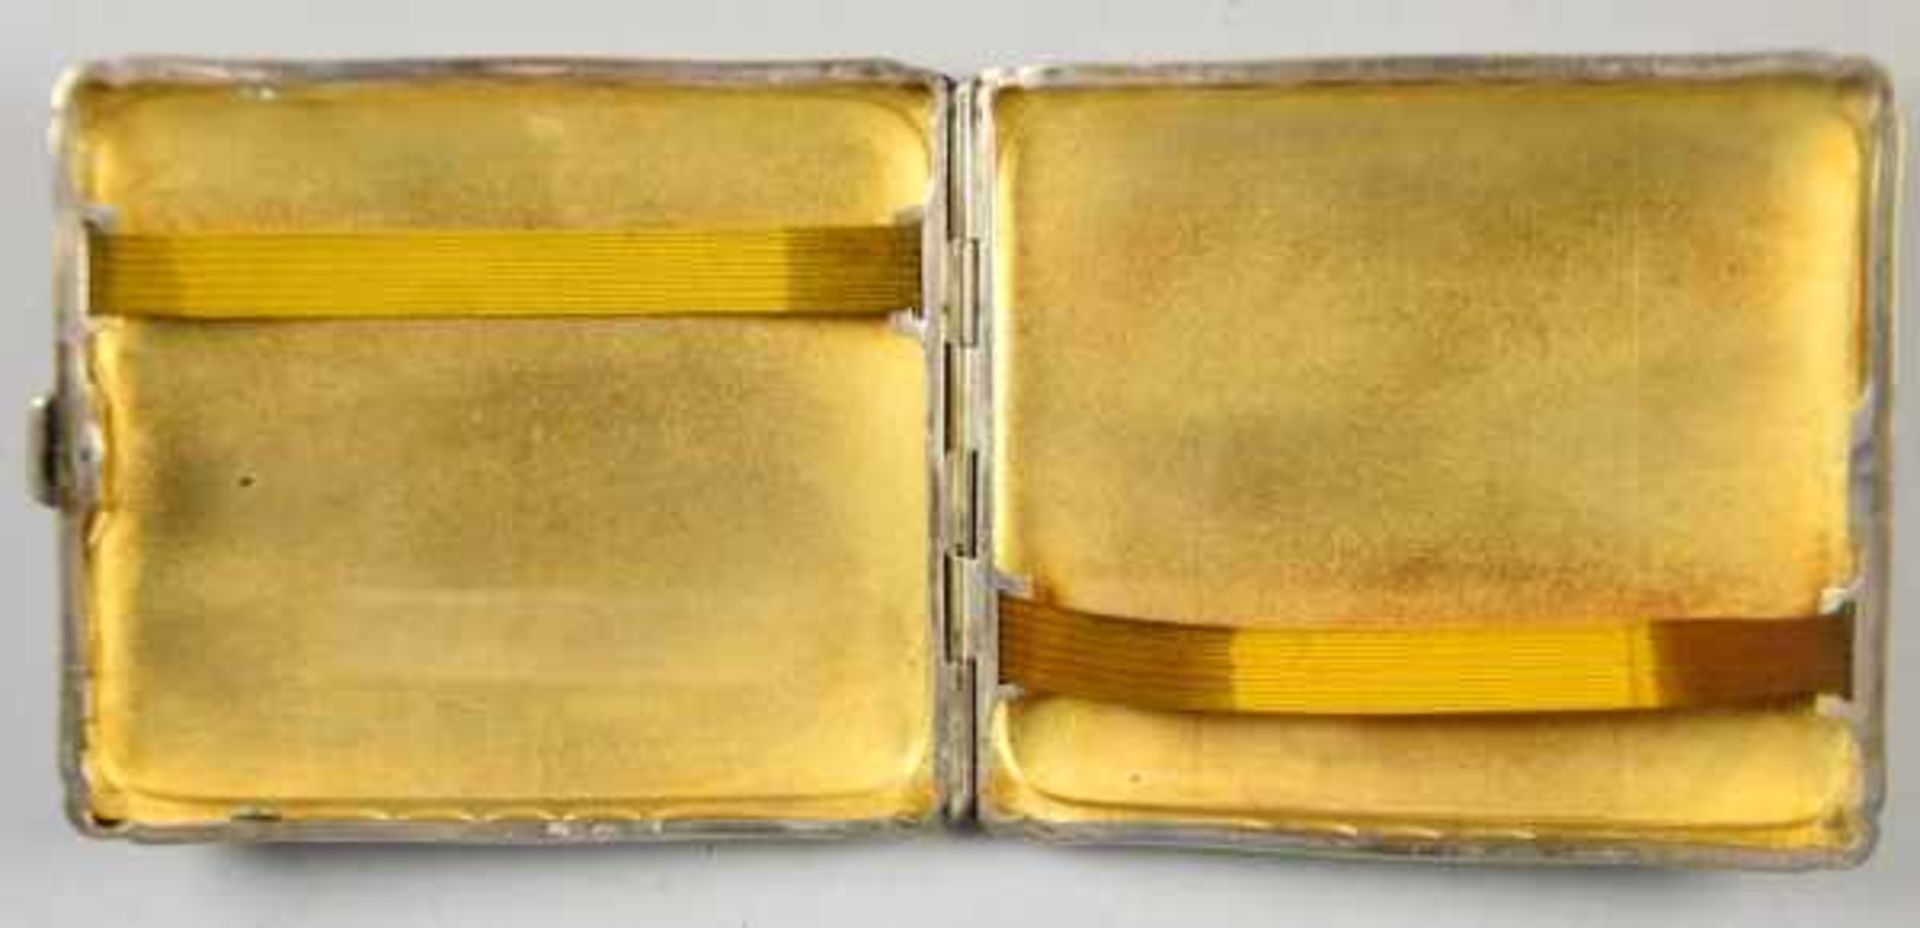 ZIGARETTENETUI rechteckige Form, Oberfläche mit ziseliertem Dekor, Innenvergoldung, Robert Kraft, - Bild 2 aus 5